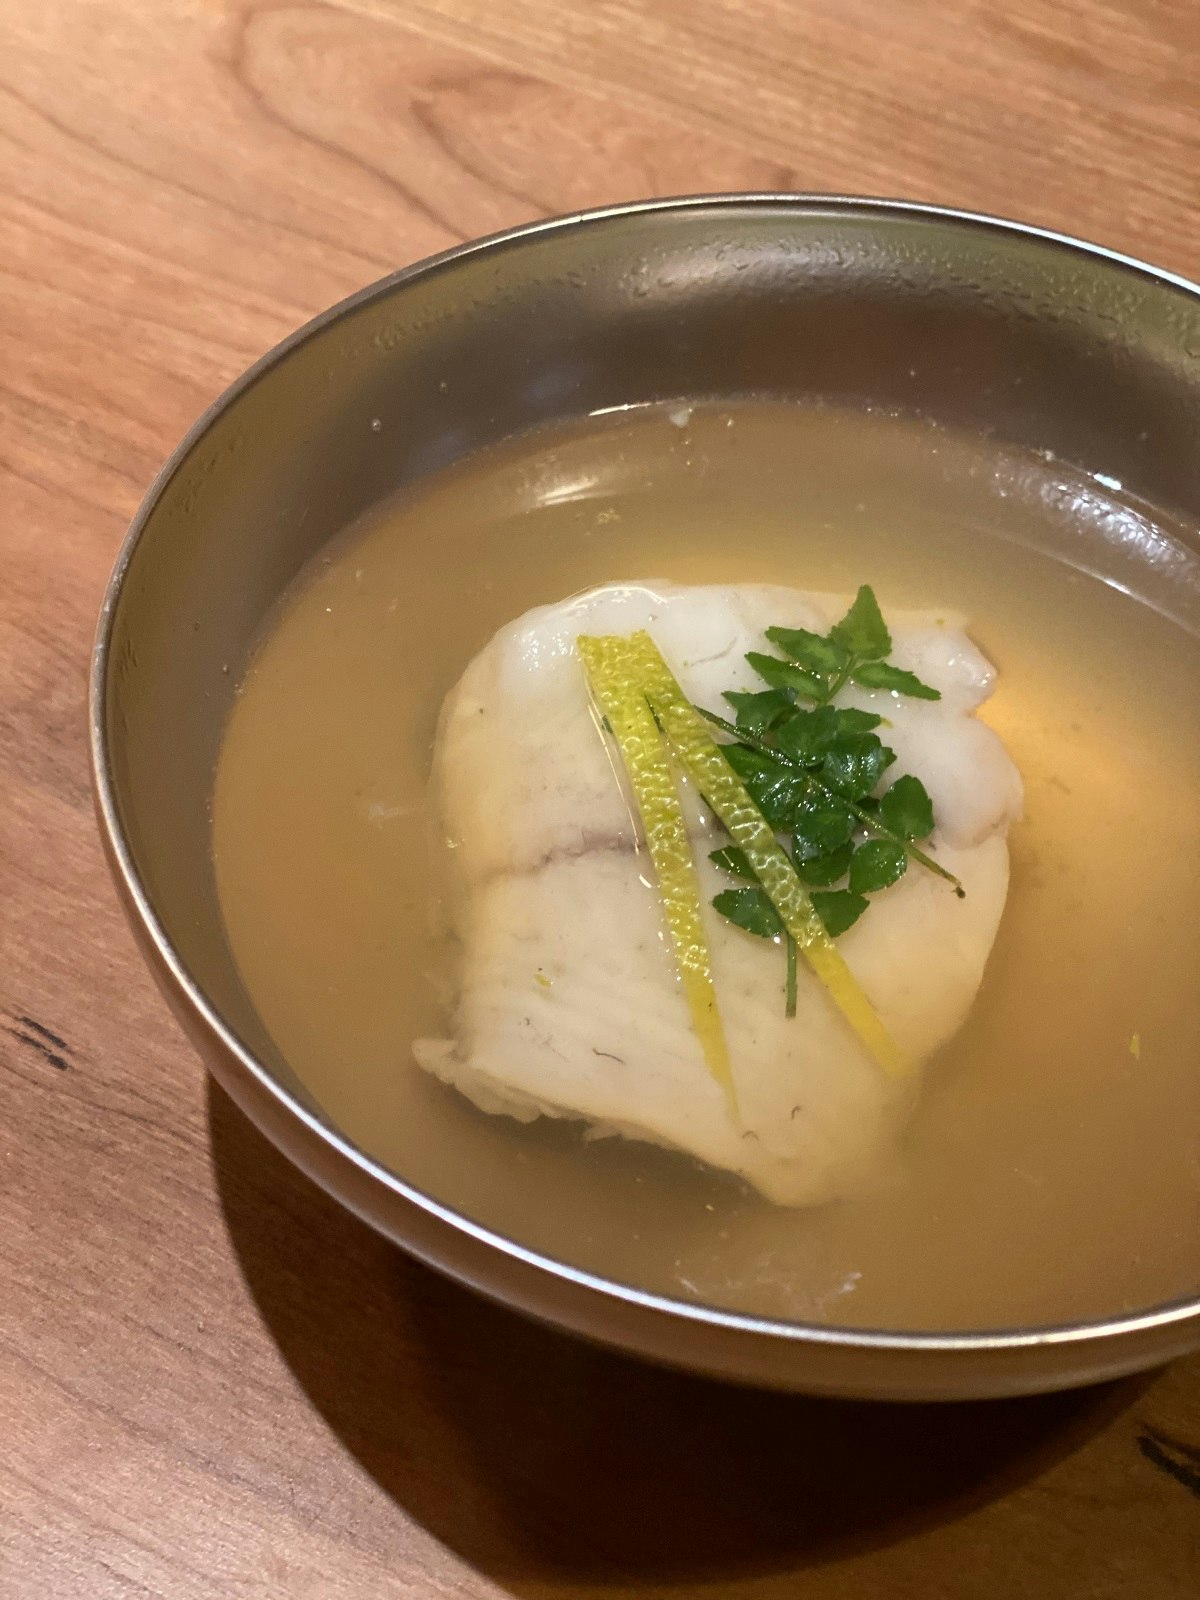 A close up of a bowl of Hirame Dashi at Sake no Hana. Turbot and citrus fruit in a clear broth.